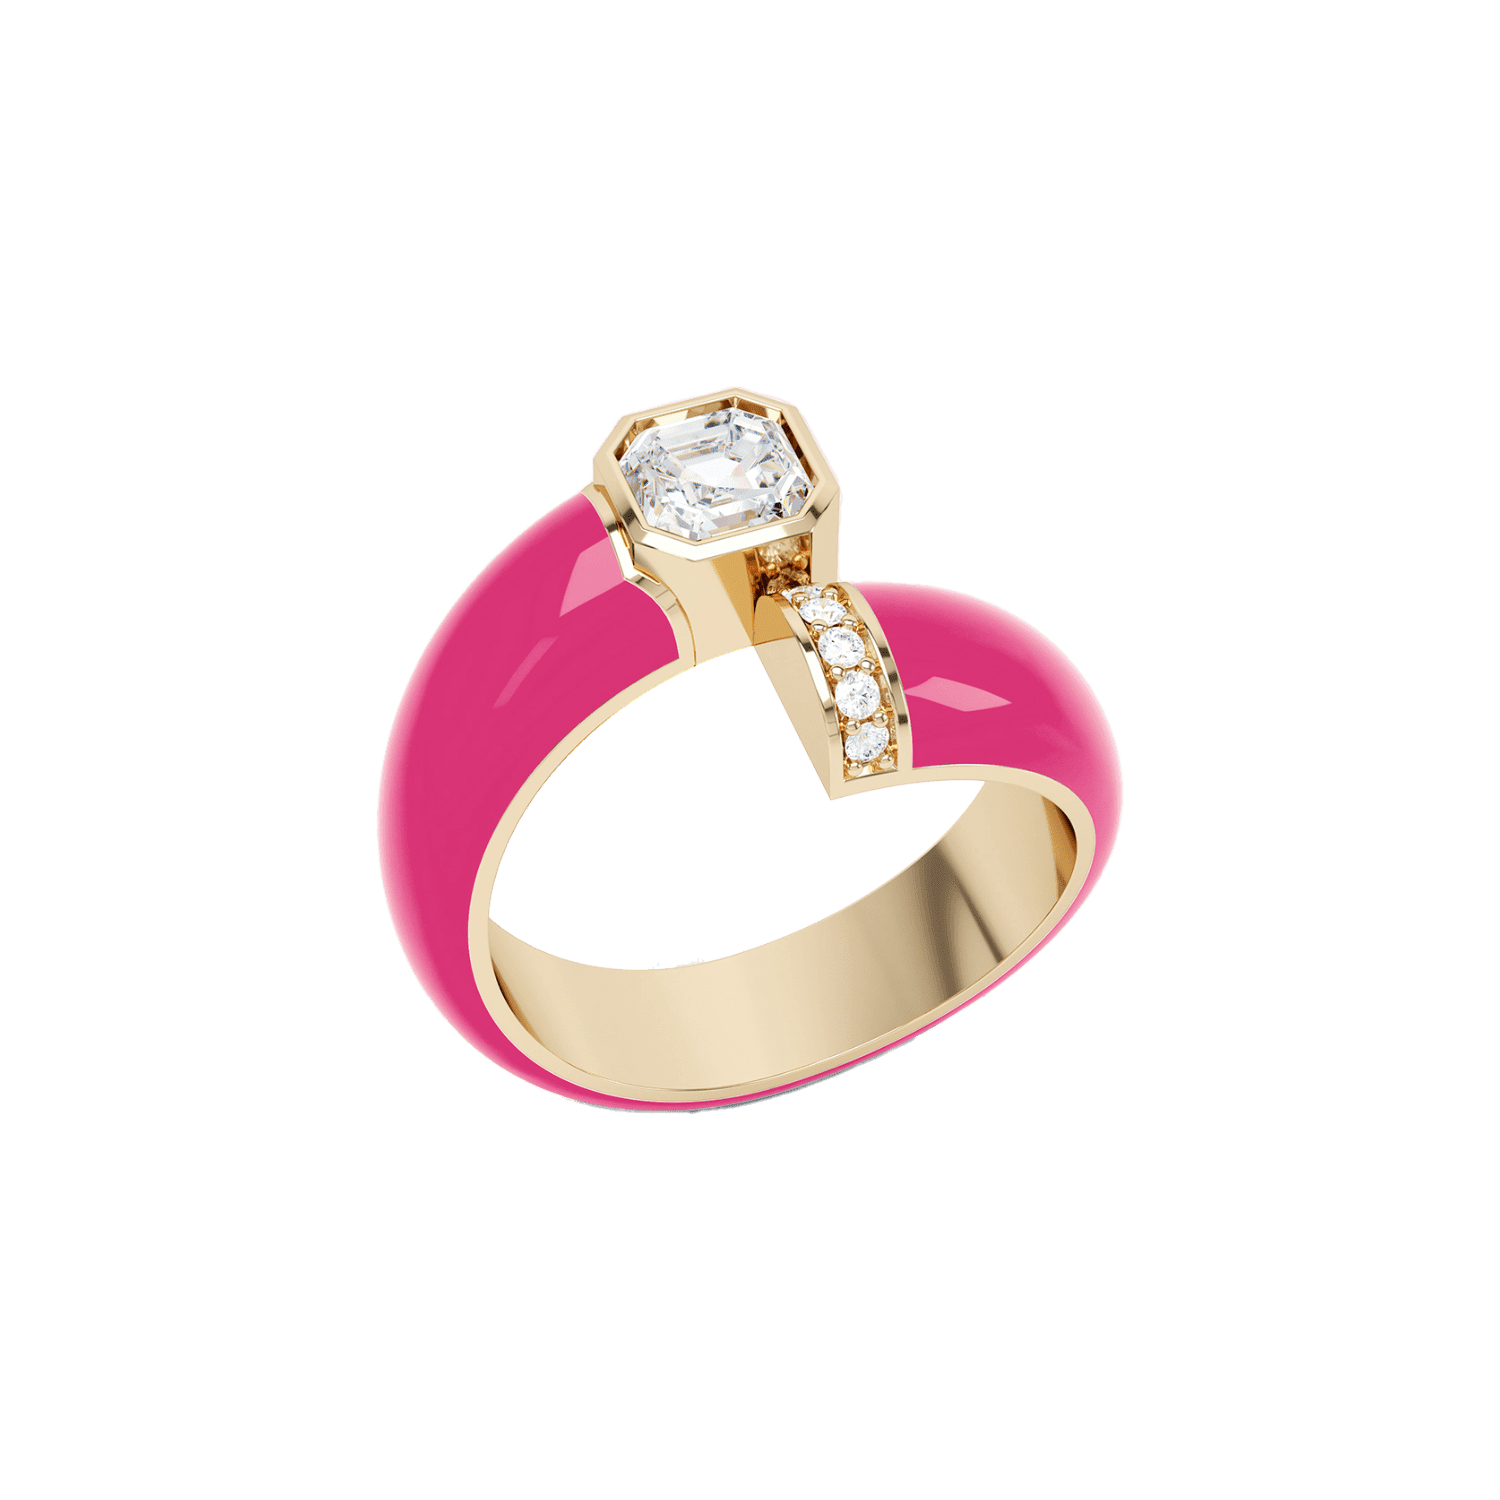 Toi et Moi Pink Enamel Asscher Diamond Ring | 18K yellow gold / 5.5  | Jewelry | The Future Rocks